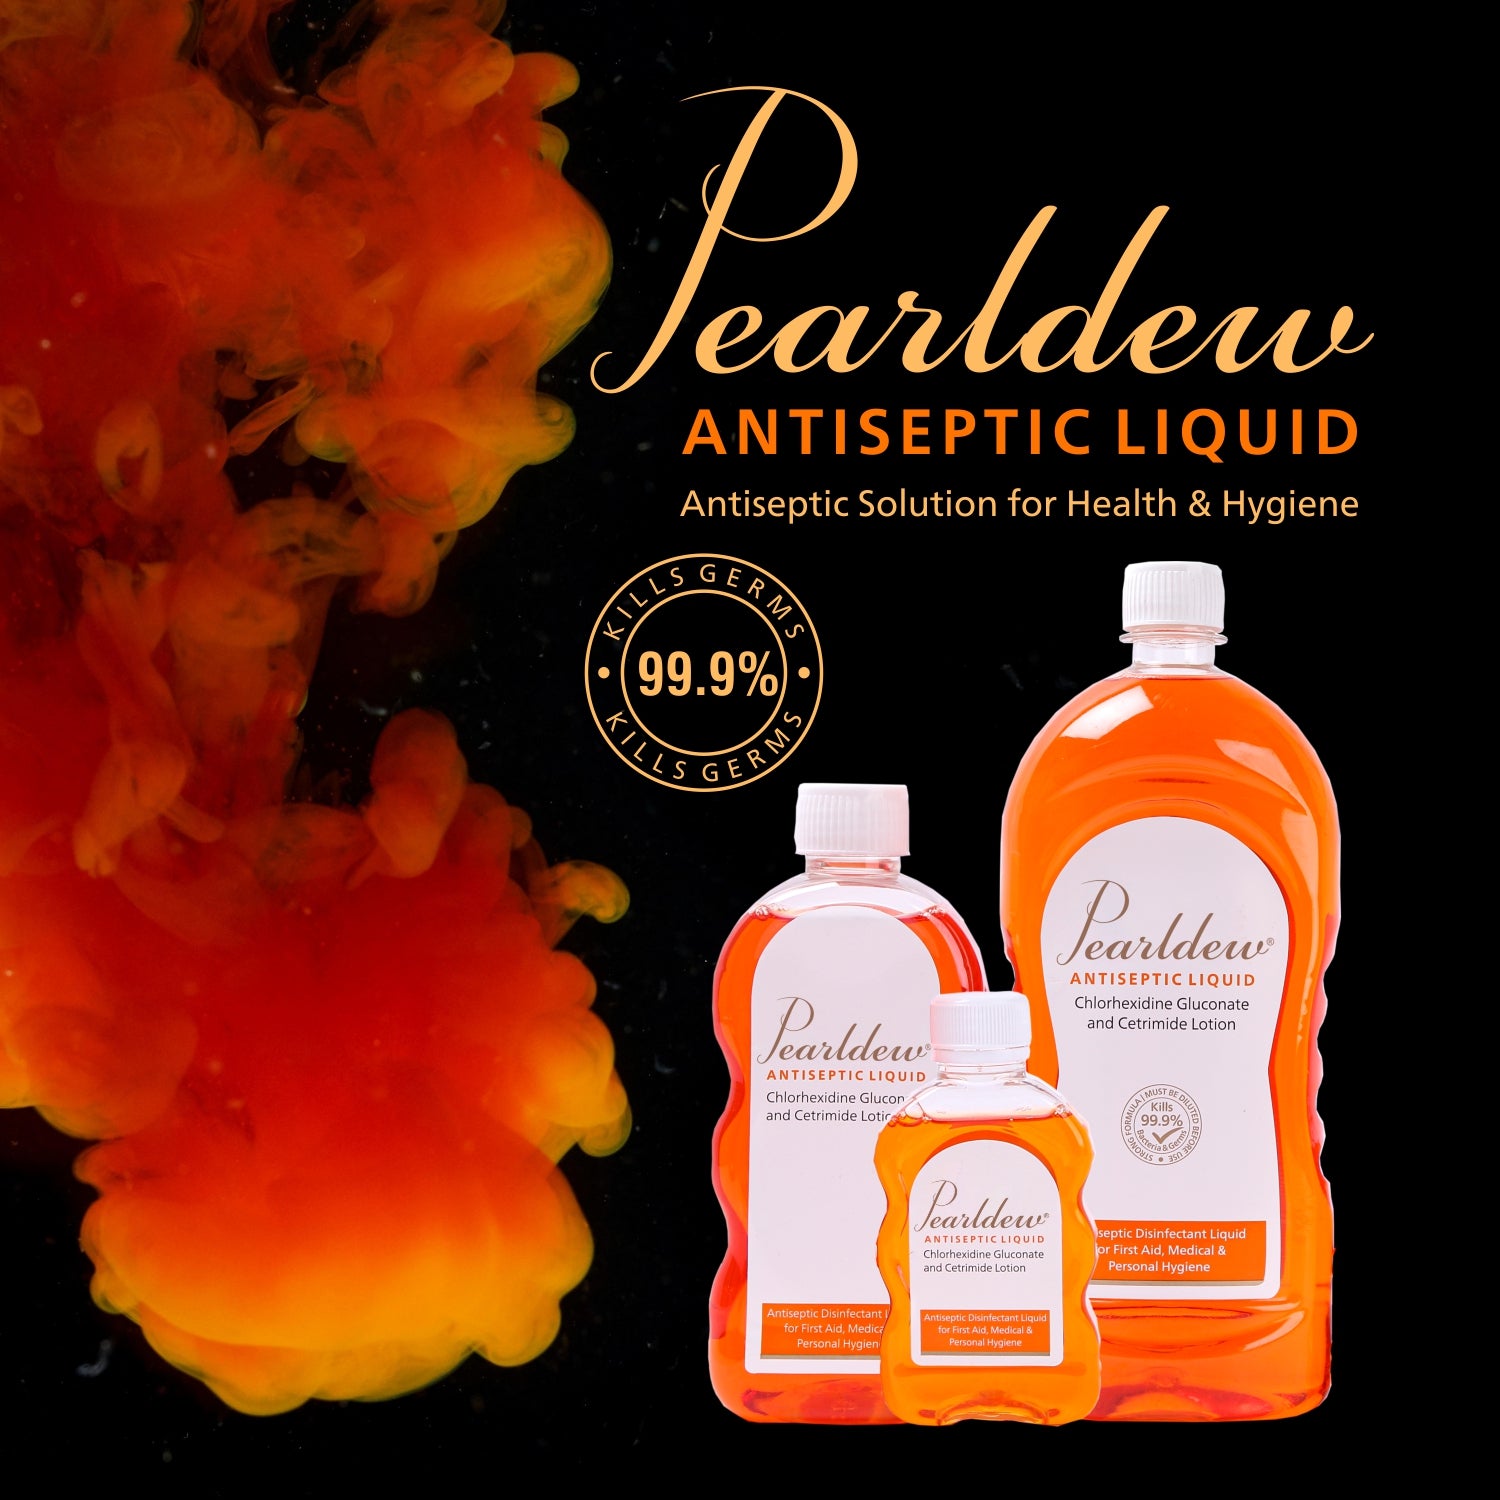 Pearldew Antiseptic Liquid (100 ml)